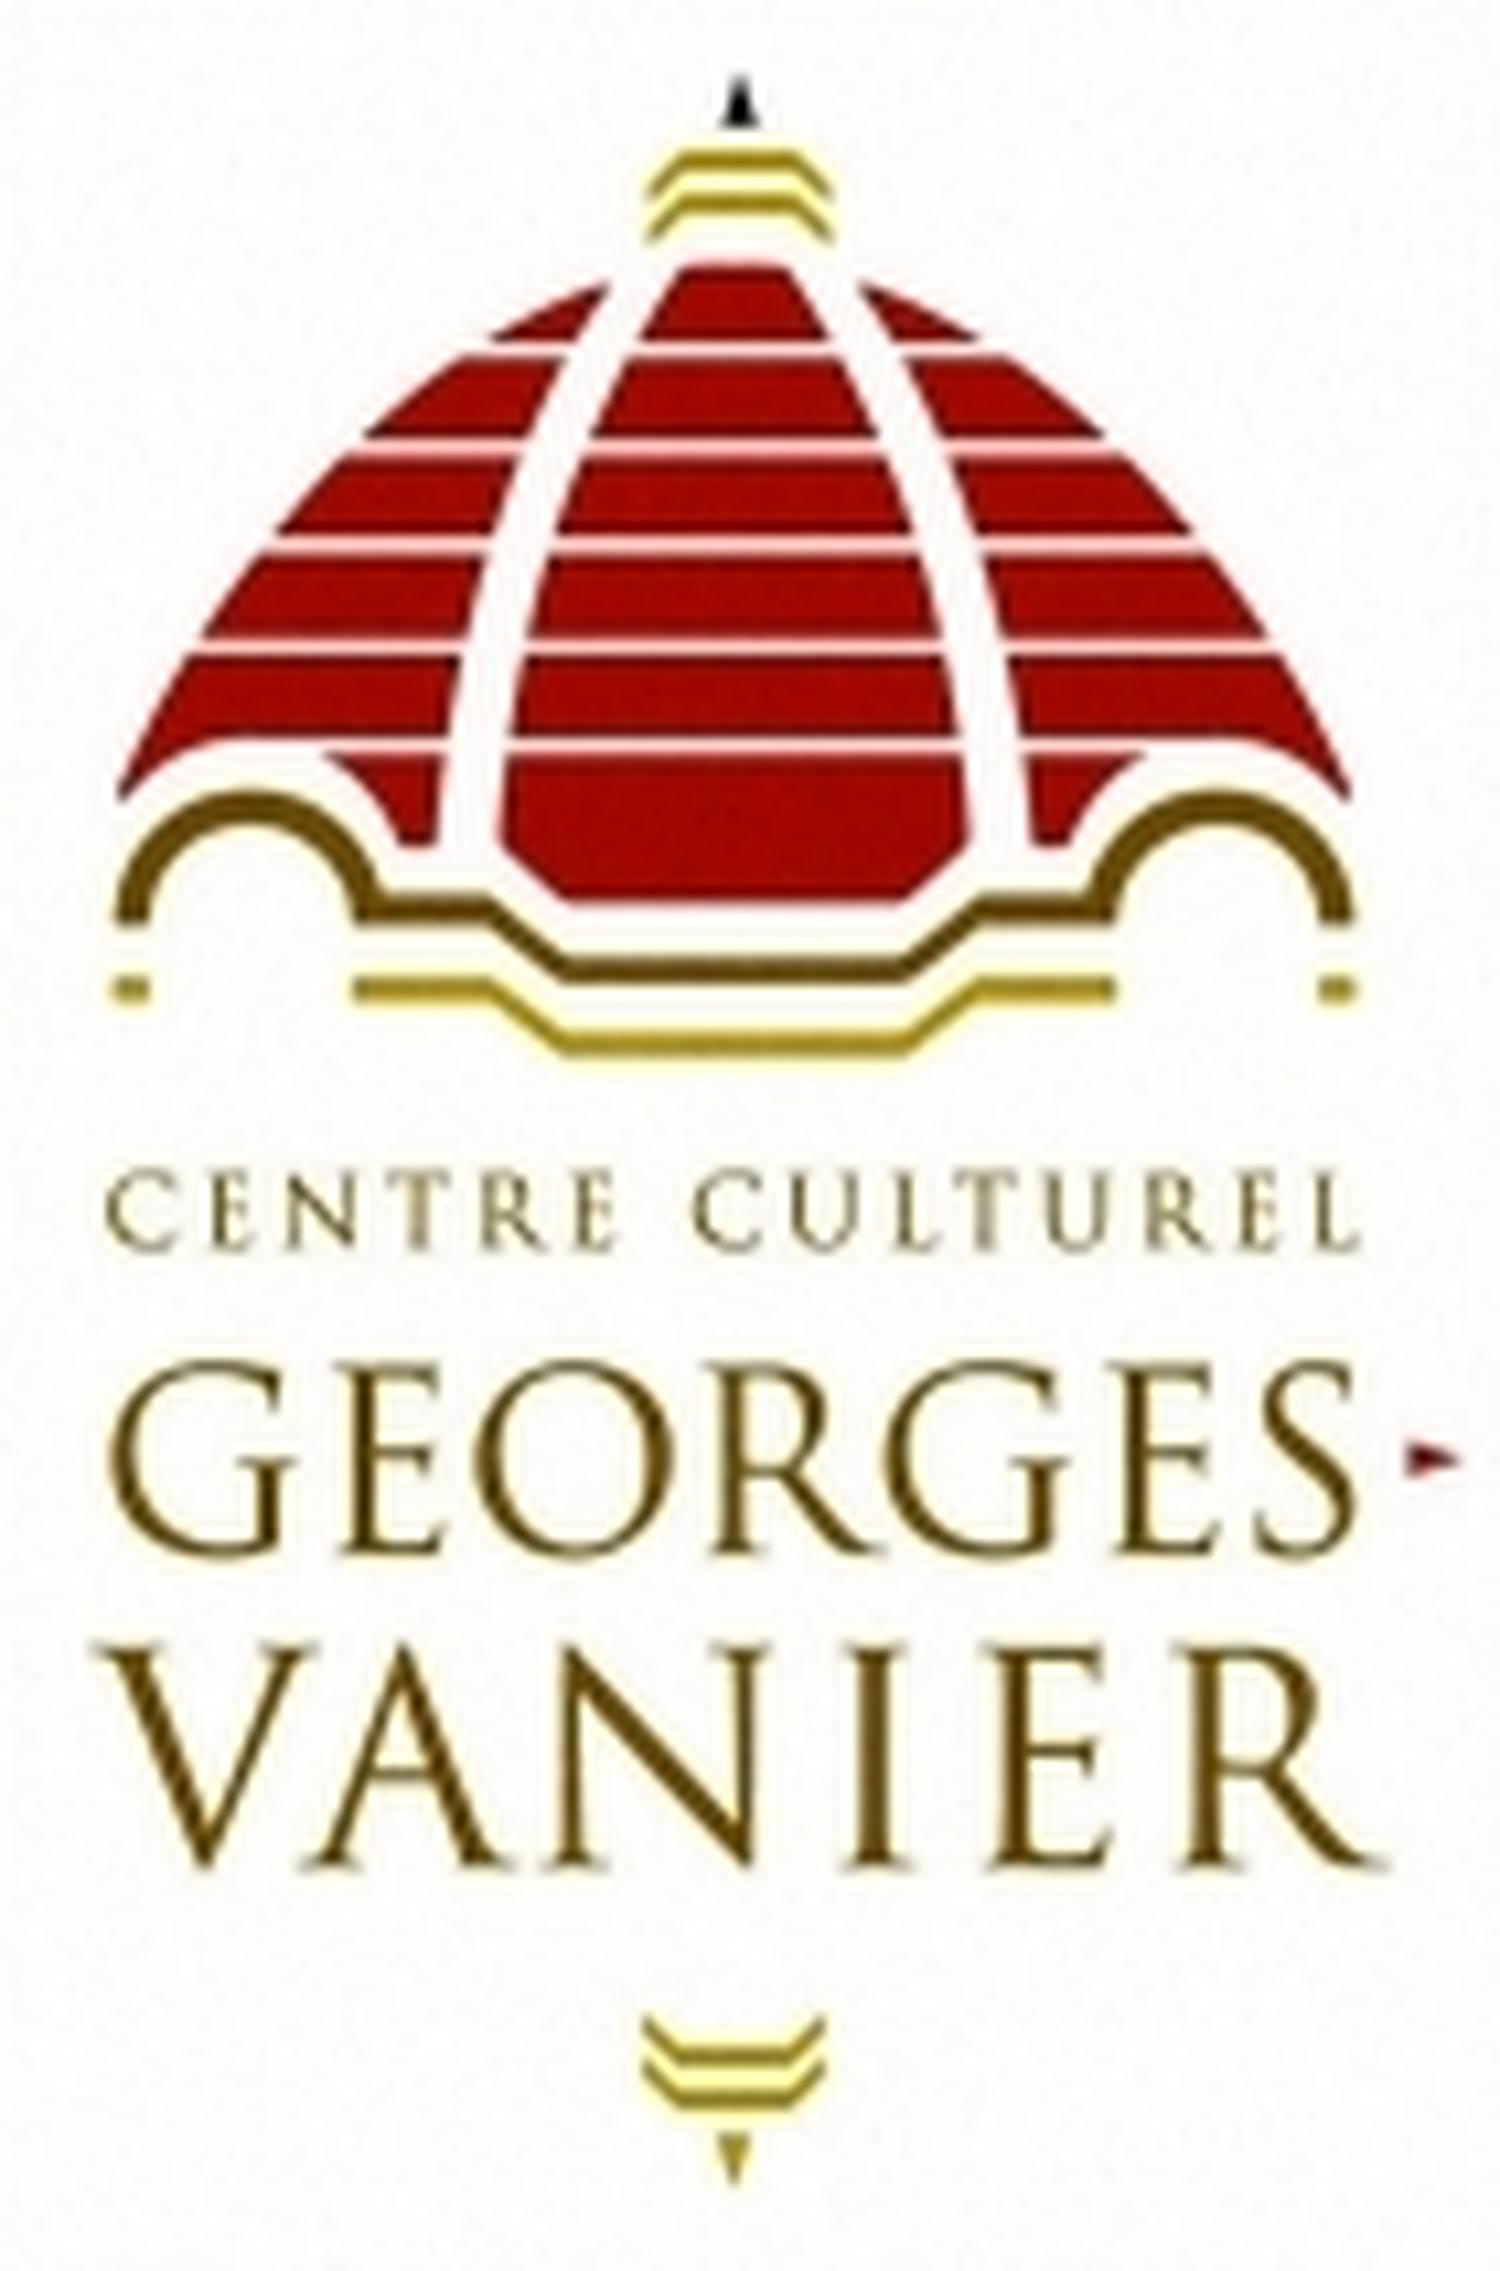 logo_georges_vanier_1.jpg (image - 140 x 100 free)